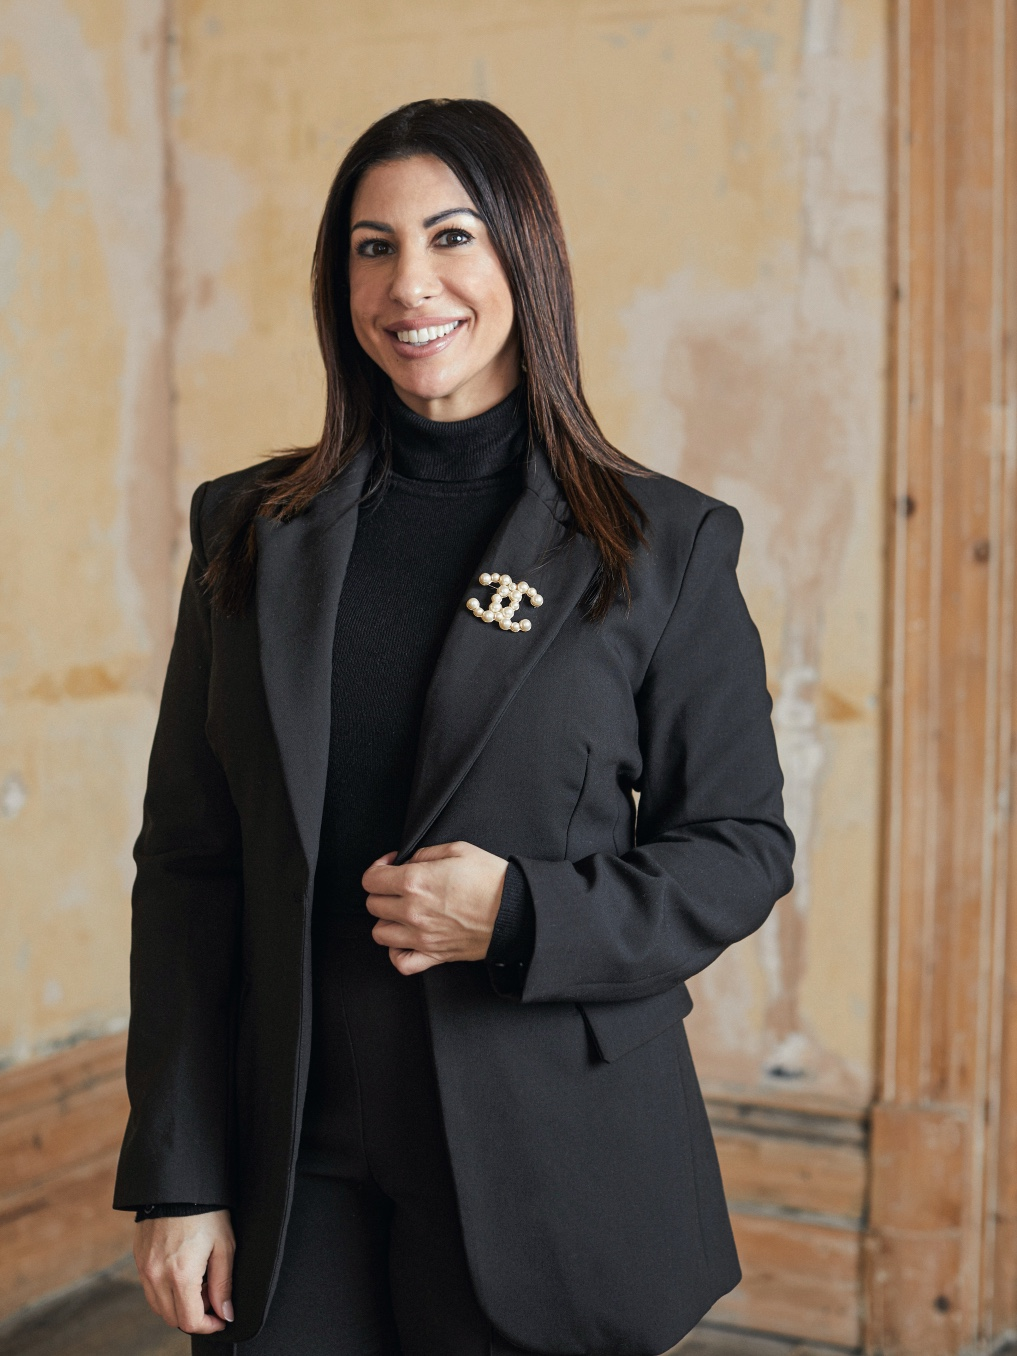 Goli-Michelle Banan, Head of Residential Real Estate